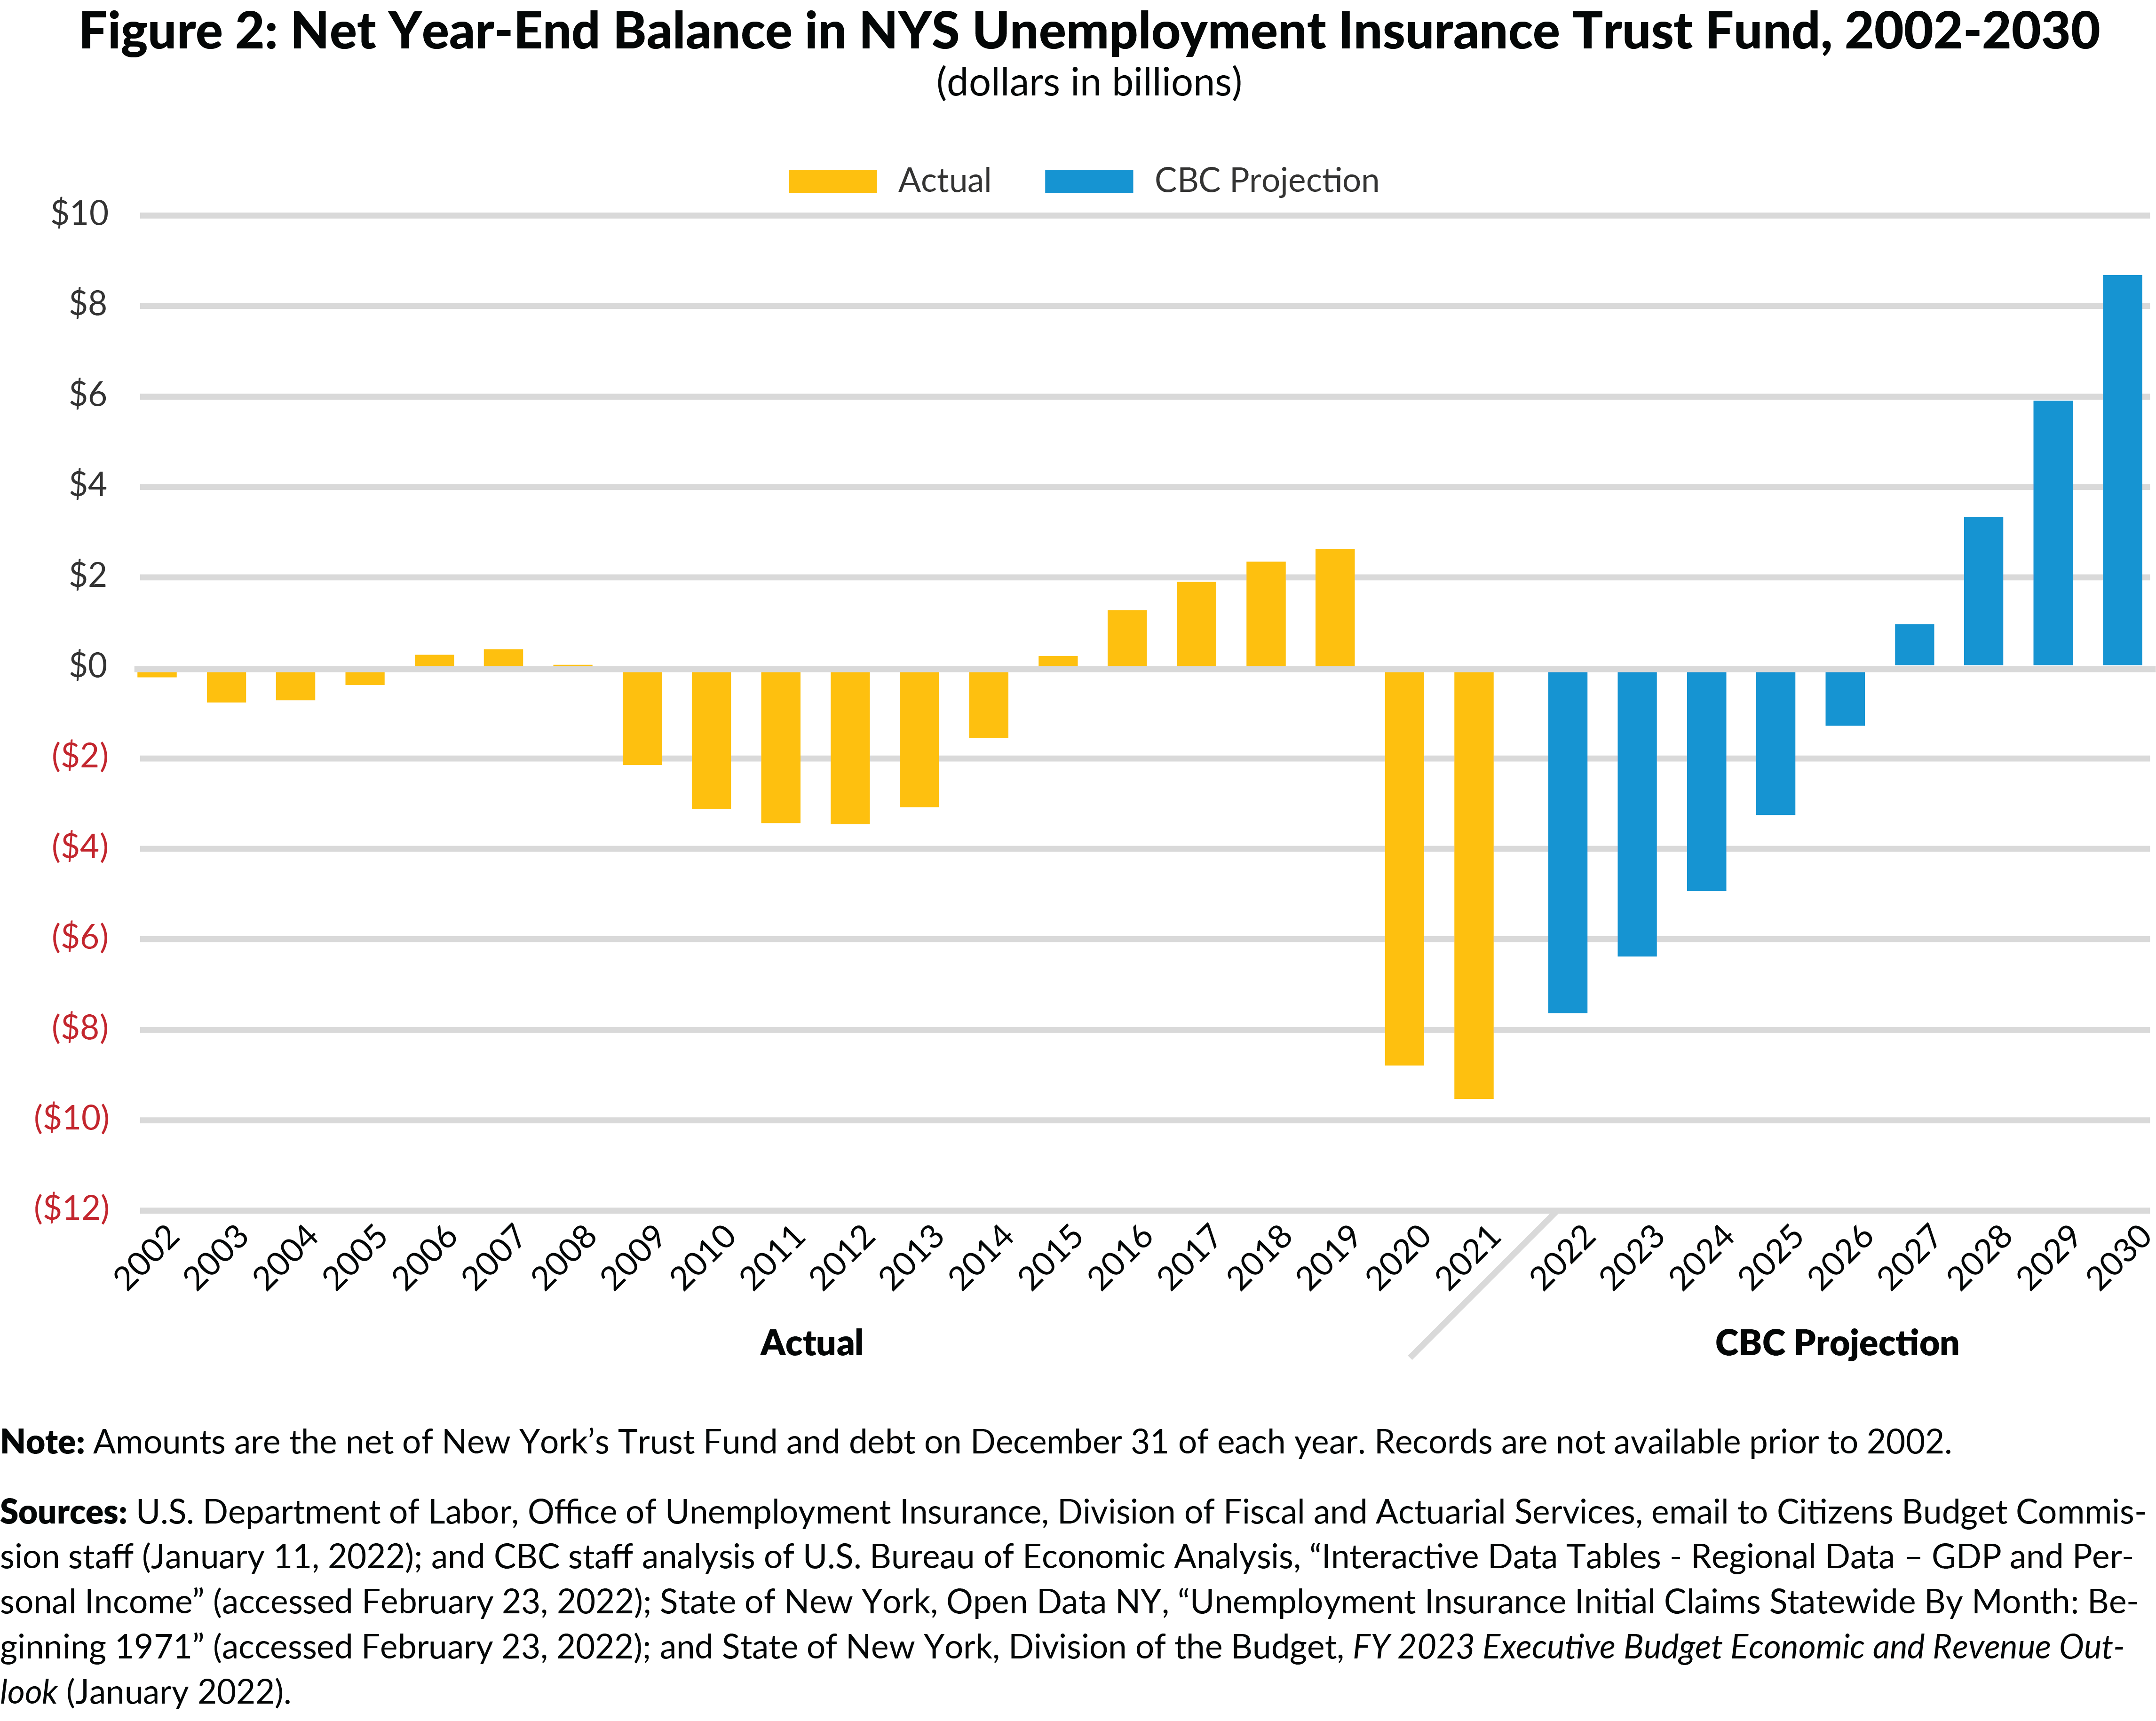 Figure 2: New York's Net UI Trust Fund  Balance, 2002-2030